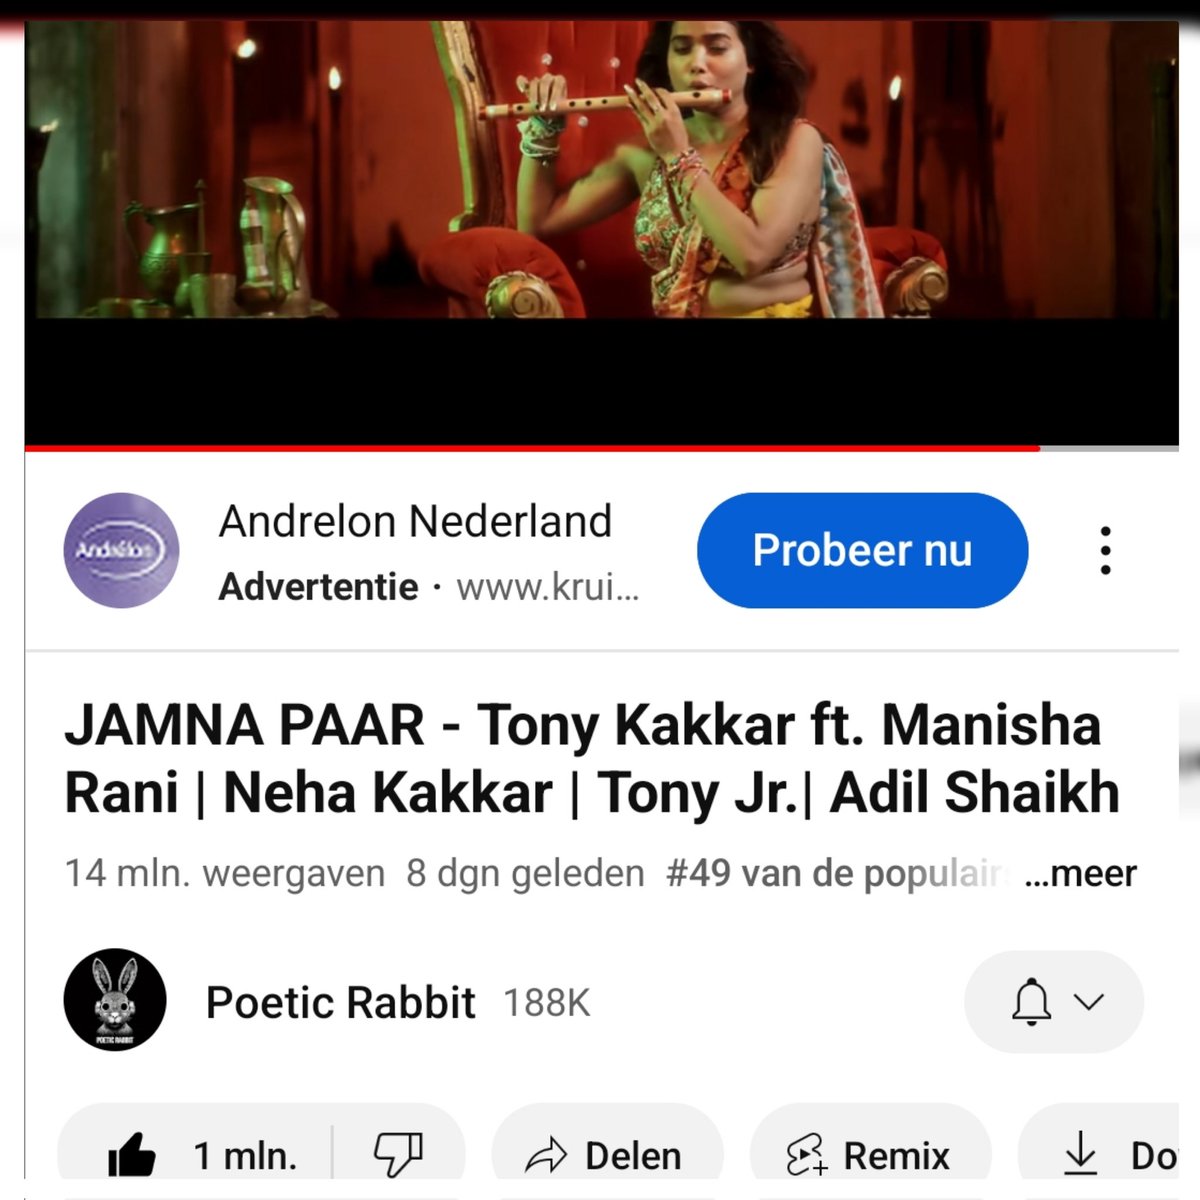 #JamnaPaar trending at 49 in Europe 🔥🔥💃 #ManishaRani #TonyKakkar #NehaKakkar congratulations 🔥🔥

#abhisha #ManishaSquad